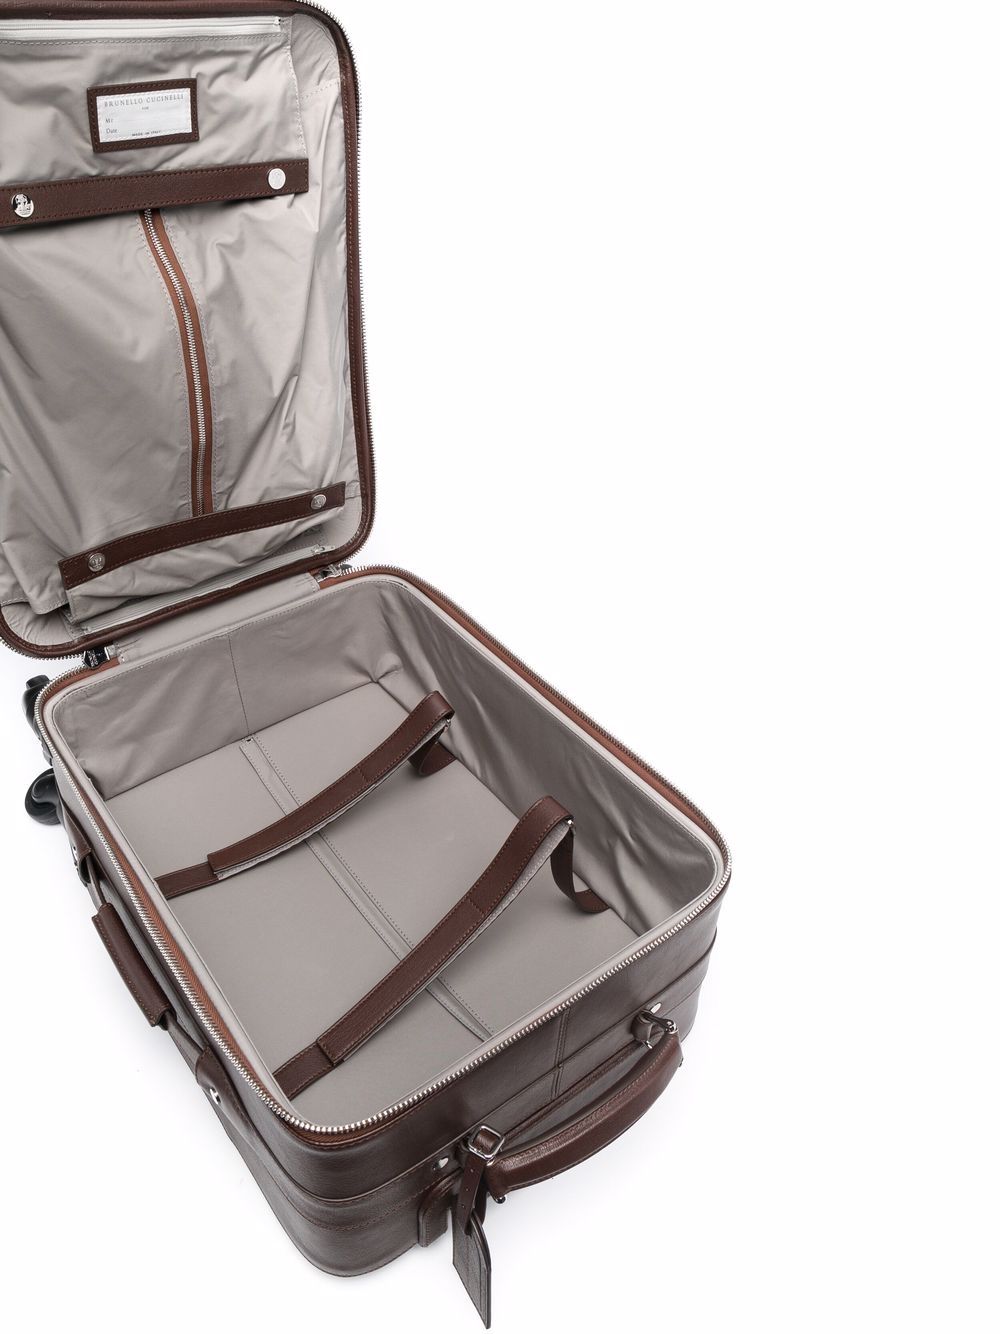 фото Brunello cucinelli кожаный чемодан на колесиках